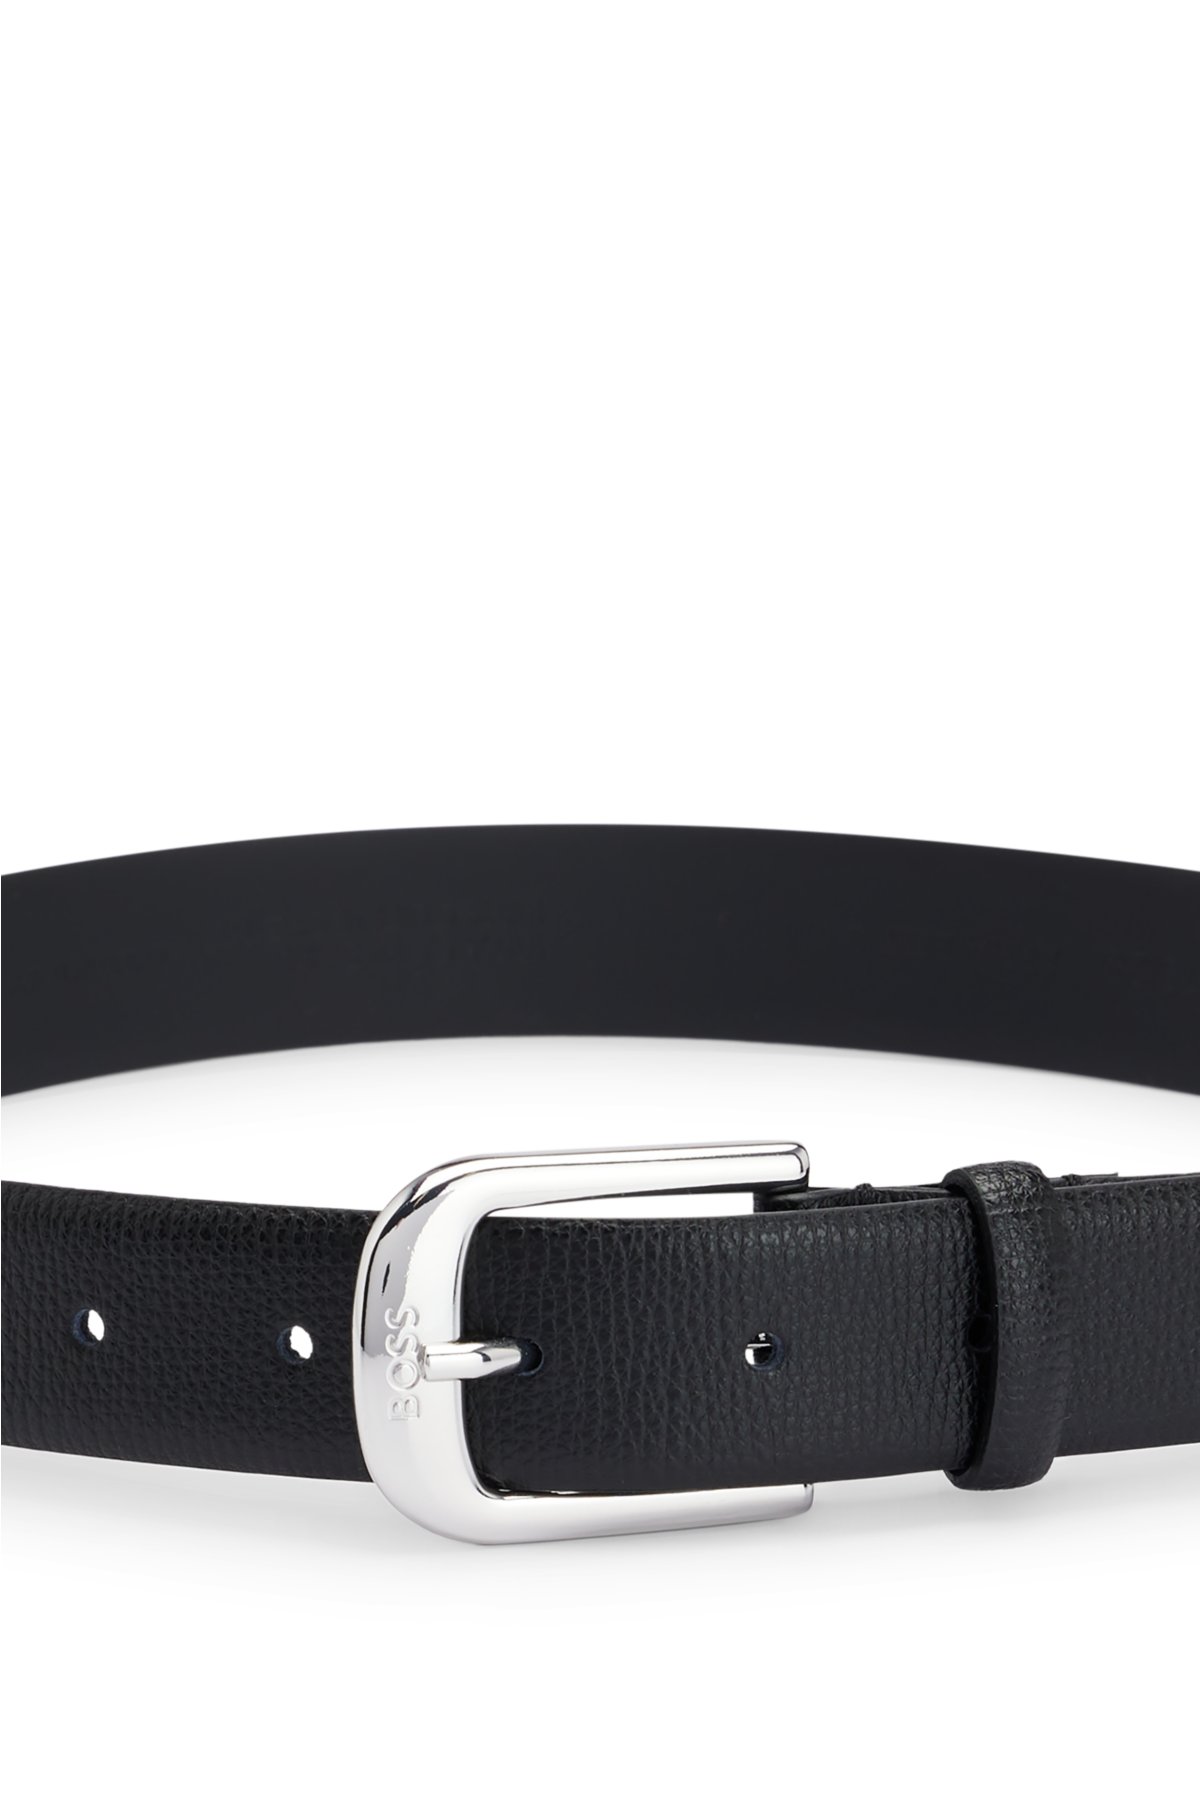 Italian-leather belt with logo buckle, Black